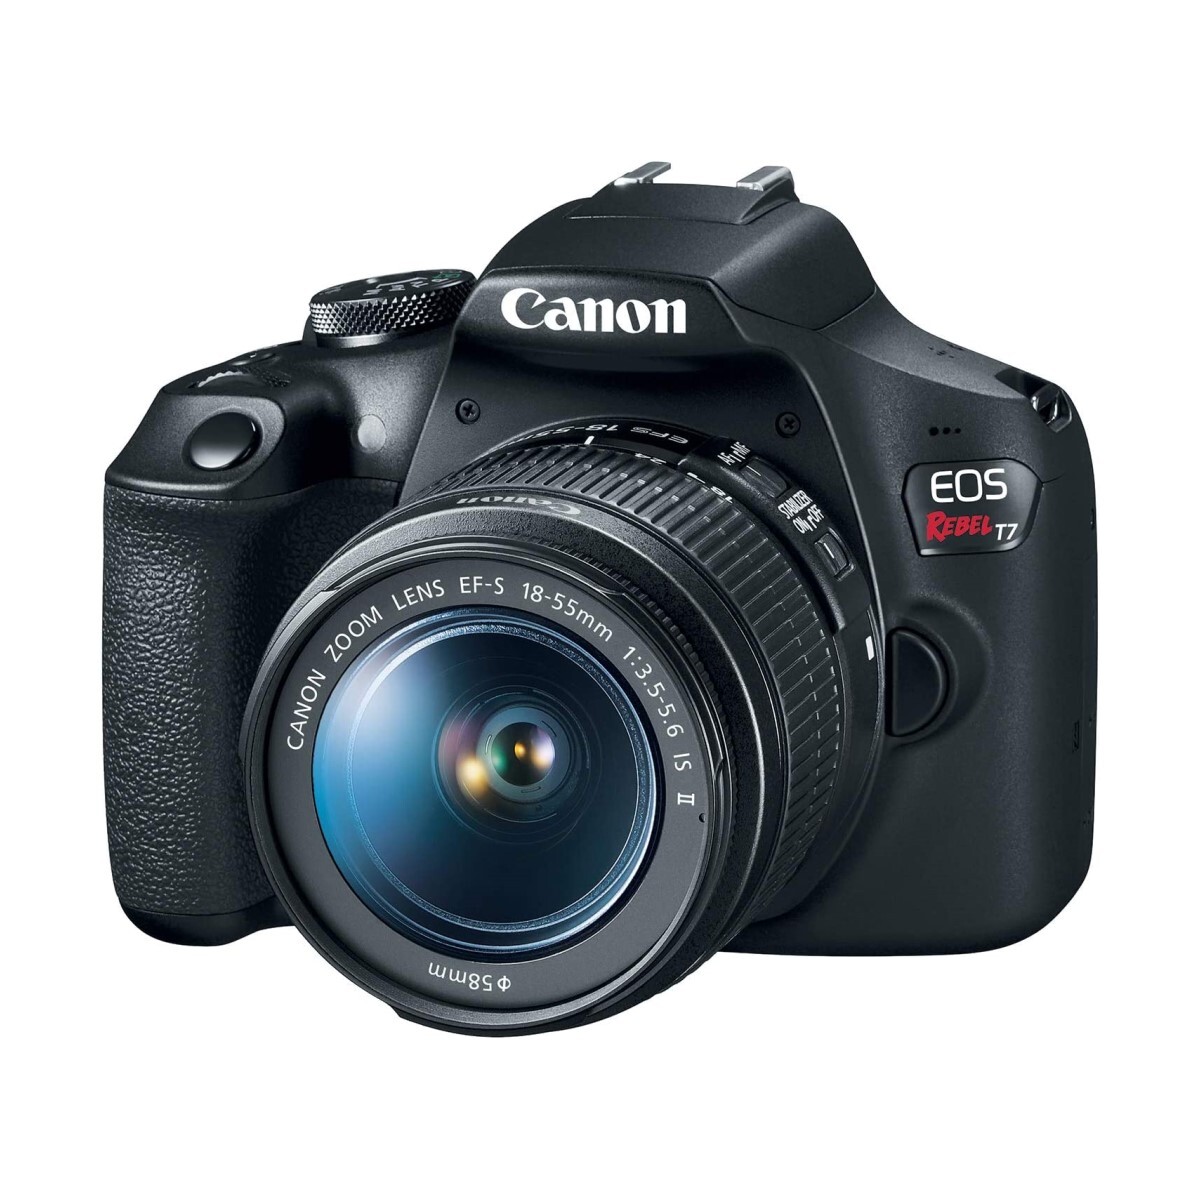 Kit cámara digital canon rebel t7 (eos 2000d) + lente 18mm-55m 24mp Negro